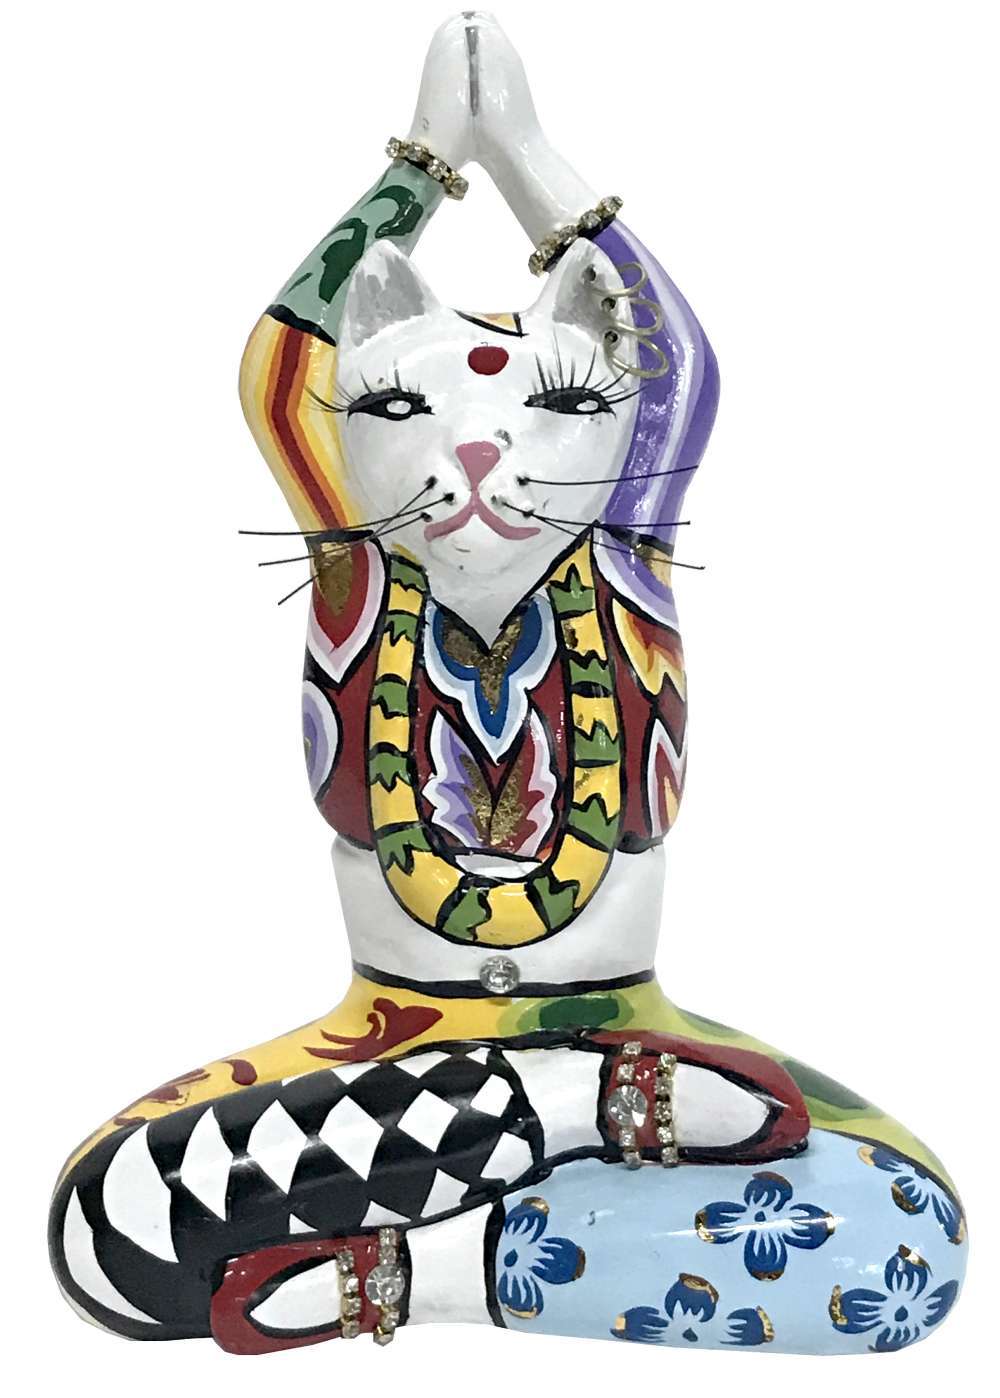 toms-drag-yoga-katze-cat-swami-s-4429